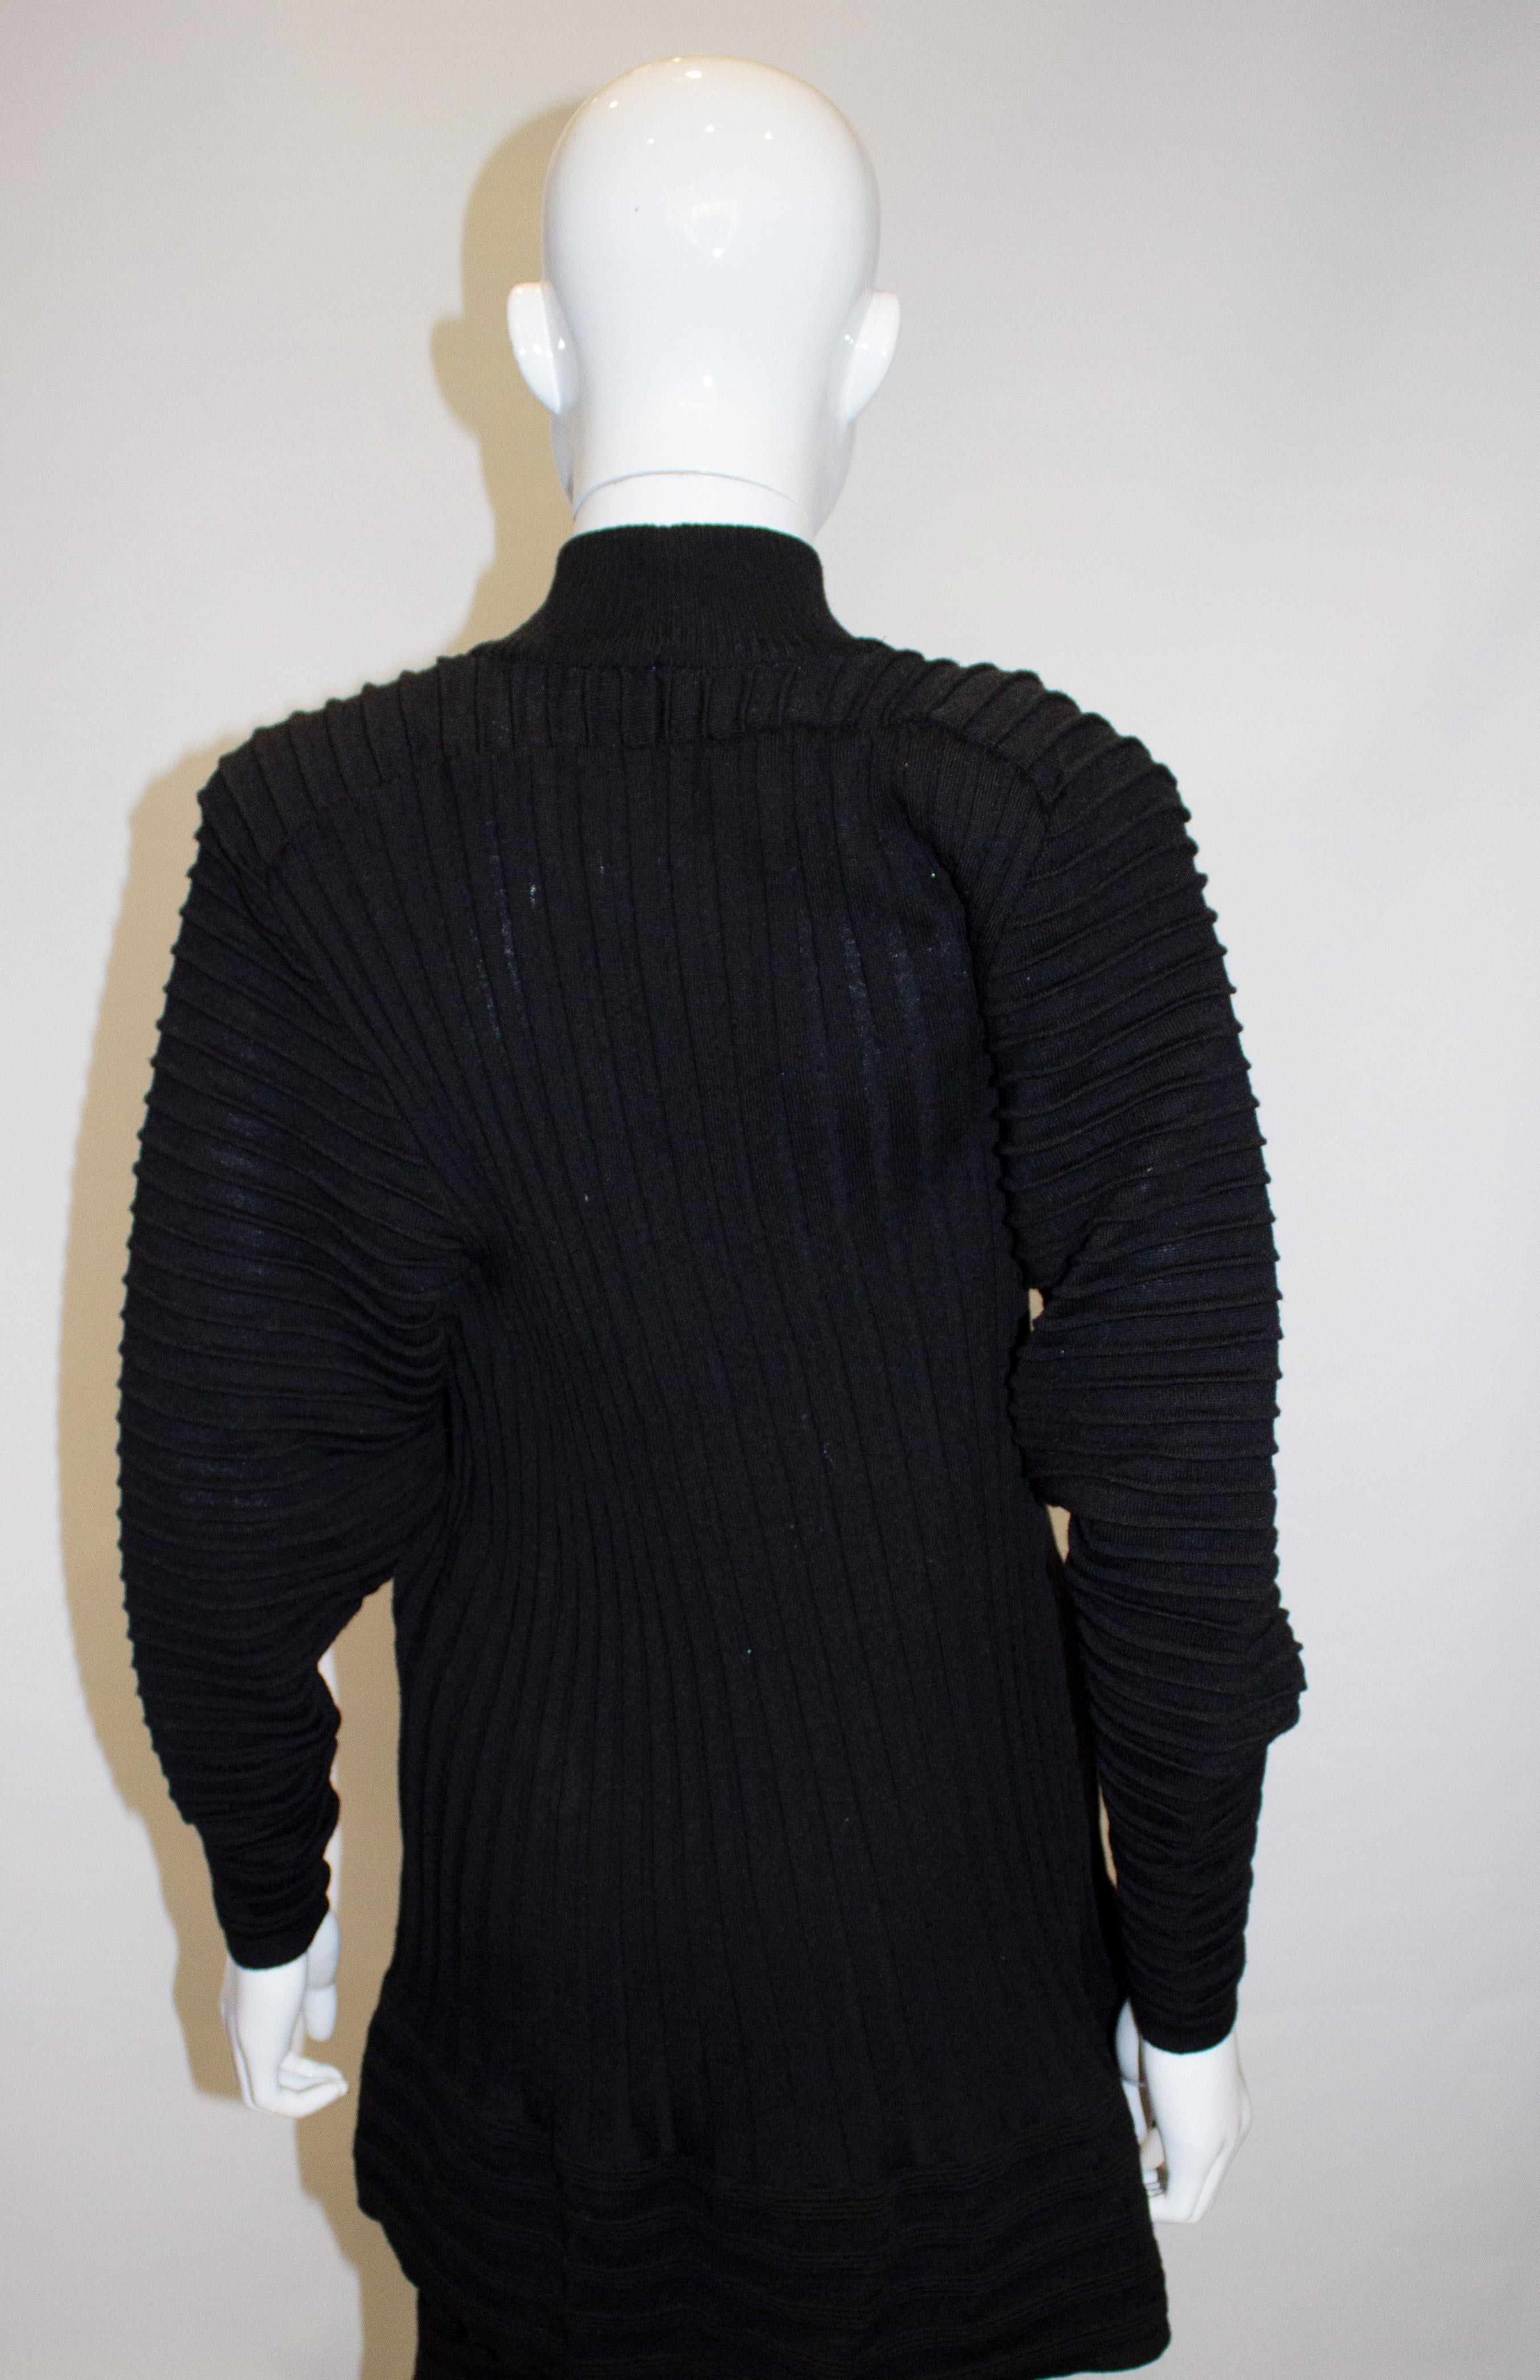   Vintage Yves Saint Laurent Knitted Tunic/Mini Dress 1